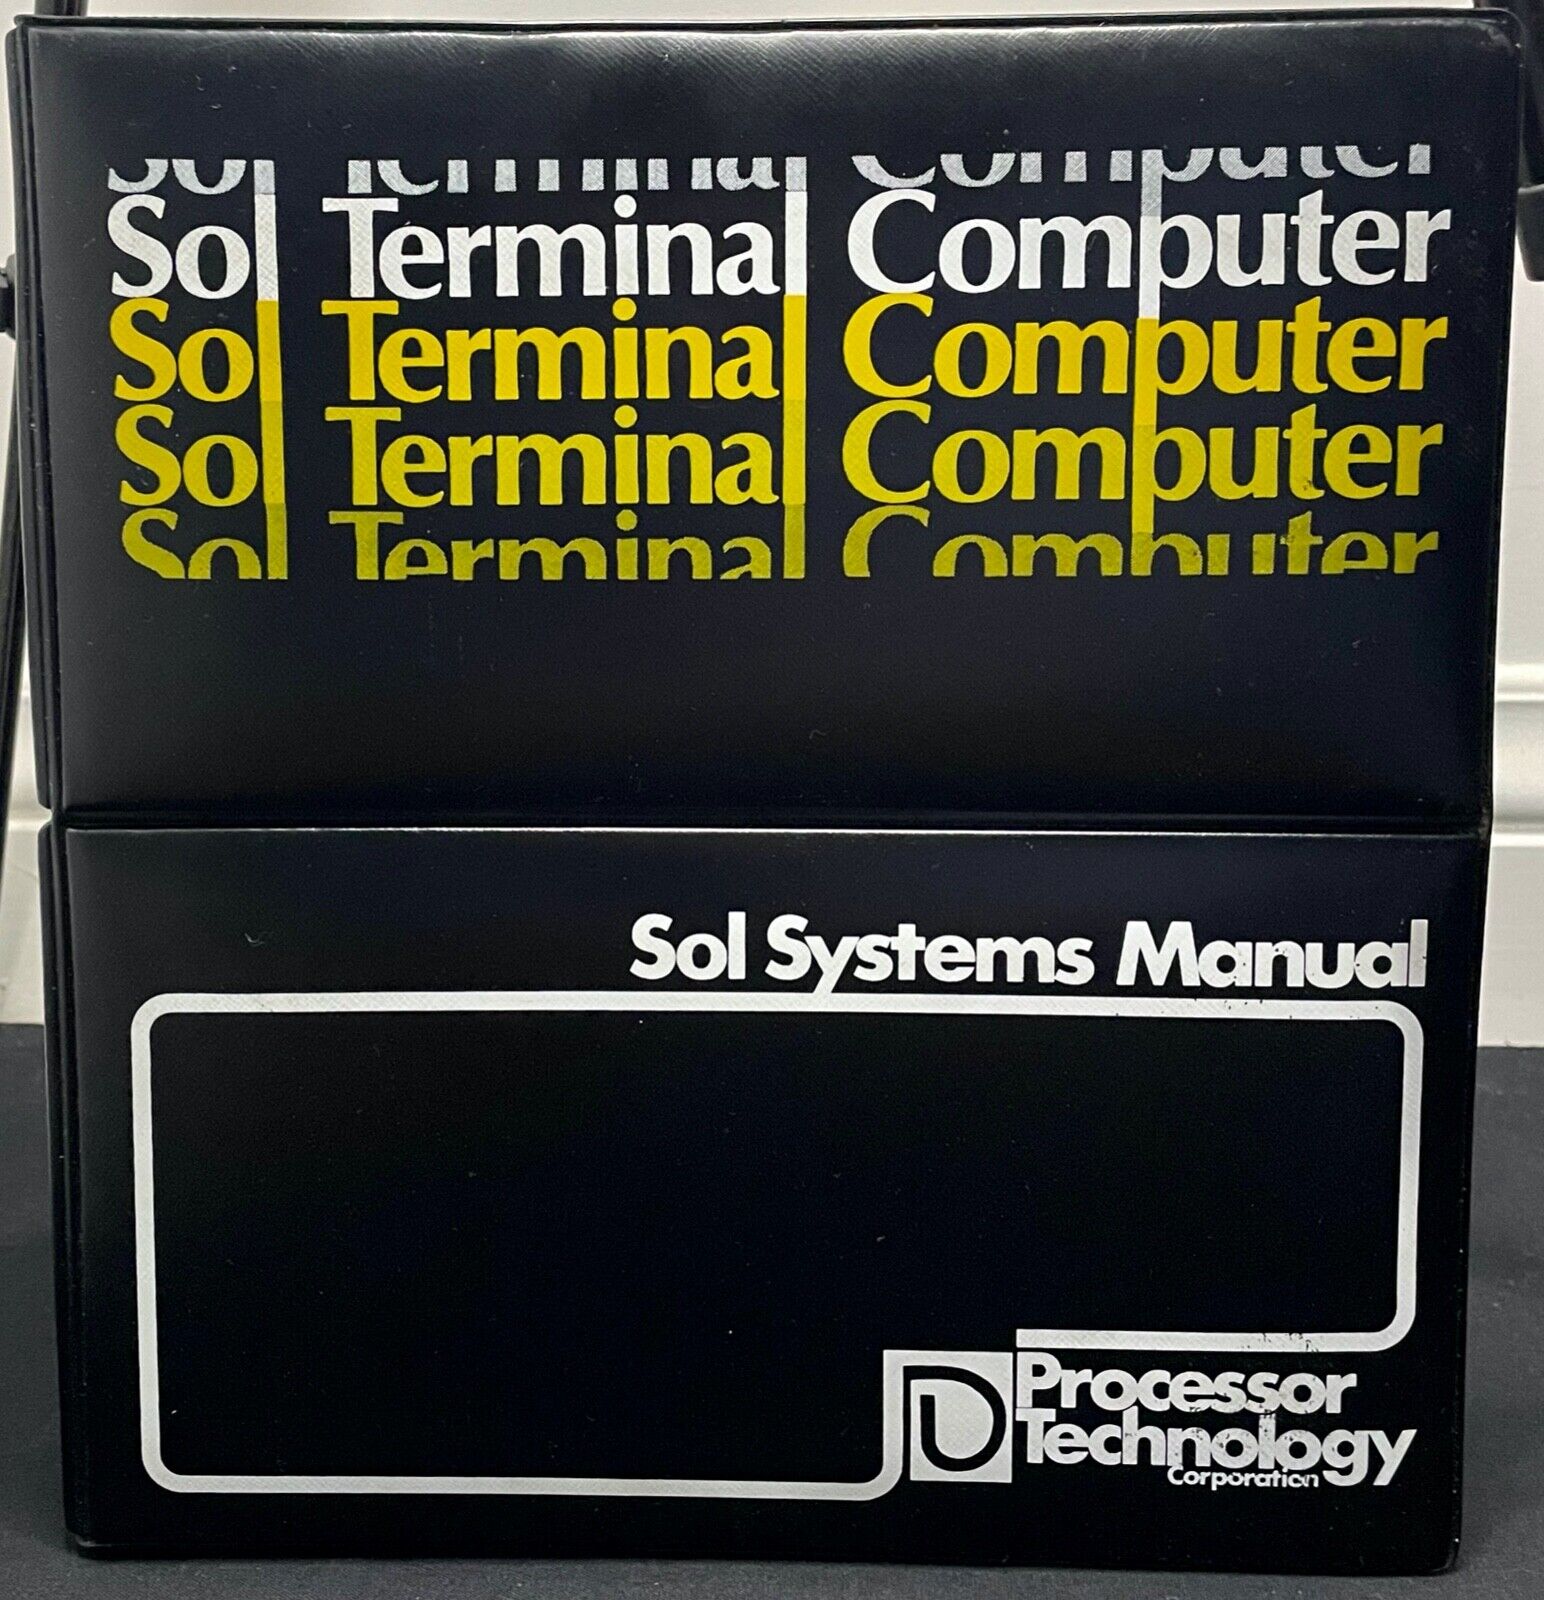 SOL 20 Original Manual Processor Technology SOL Terminal Computer Manual RARE